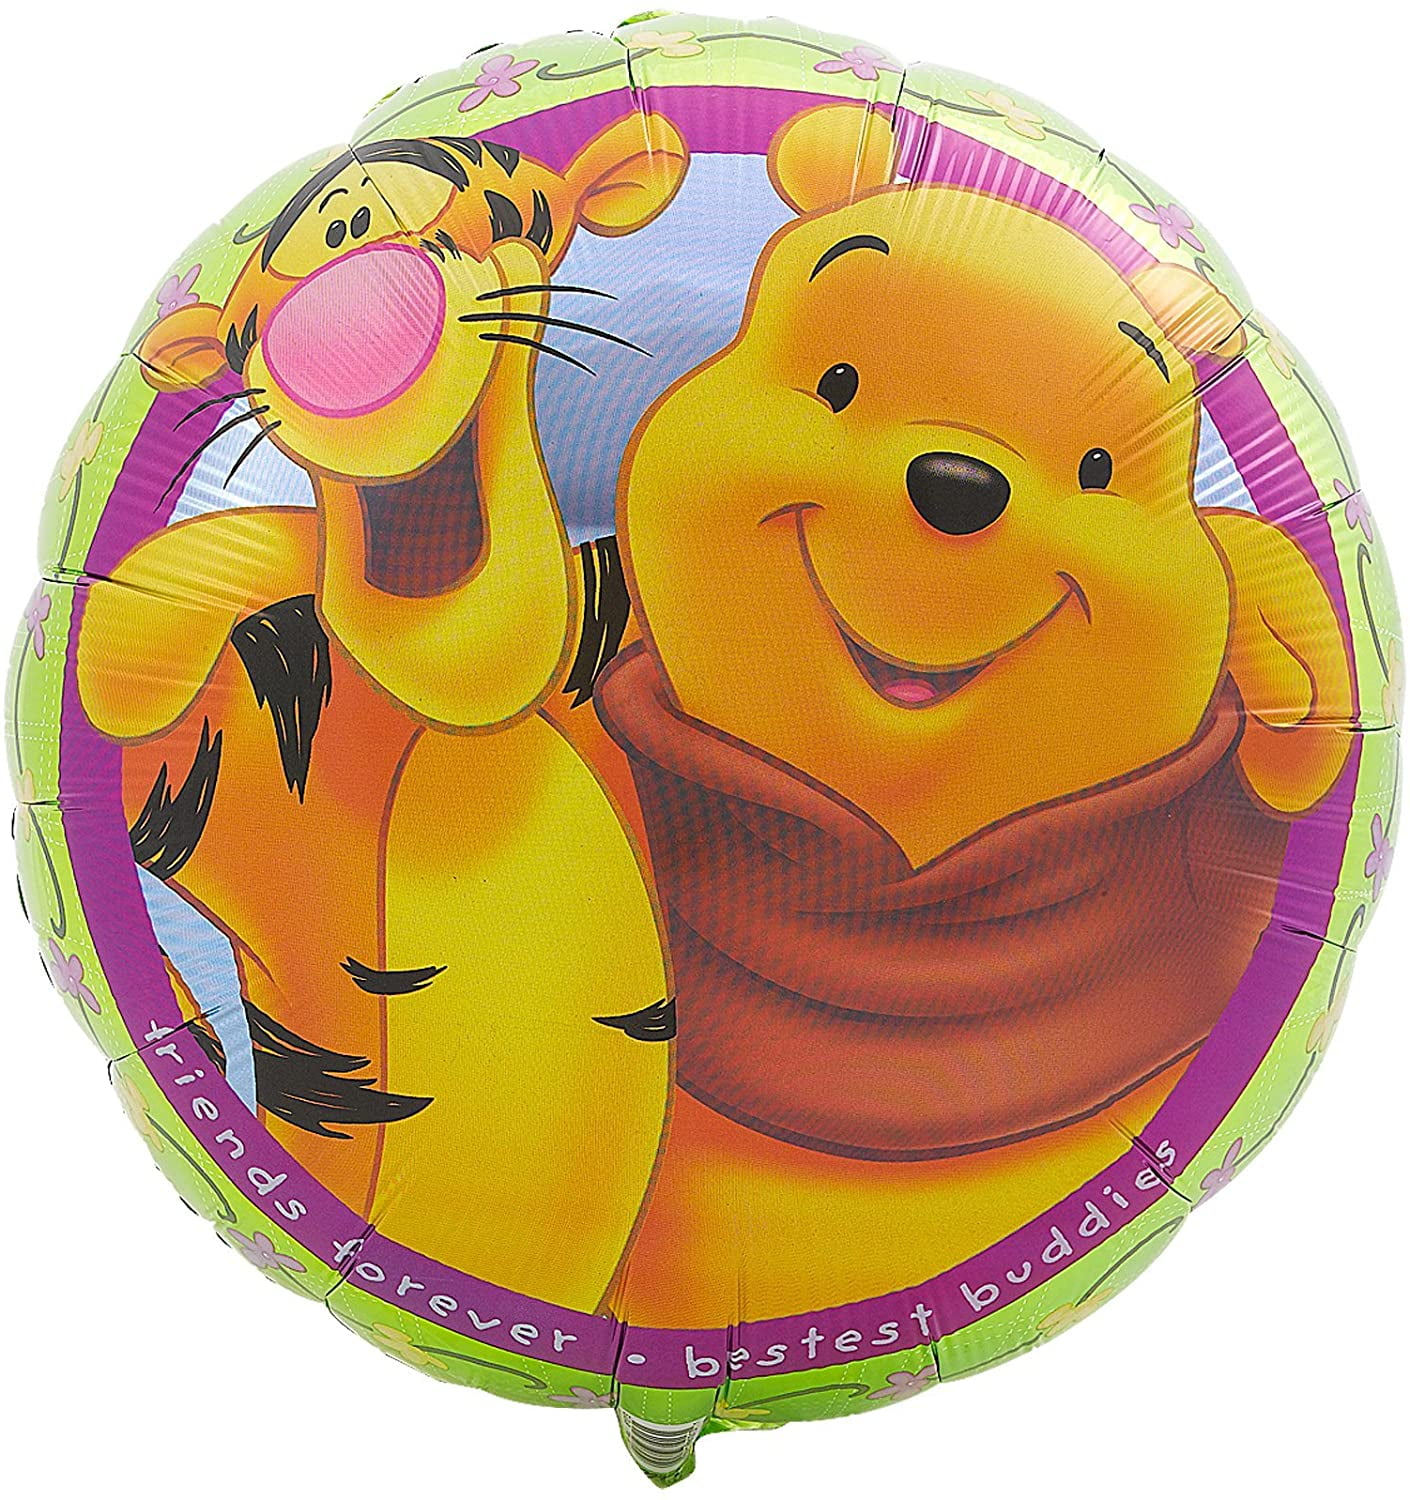 Peluche doudou winnie the Pooh10 ballon football Disney 18 cm